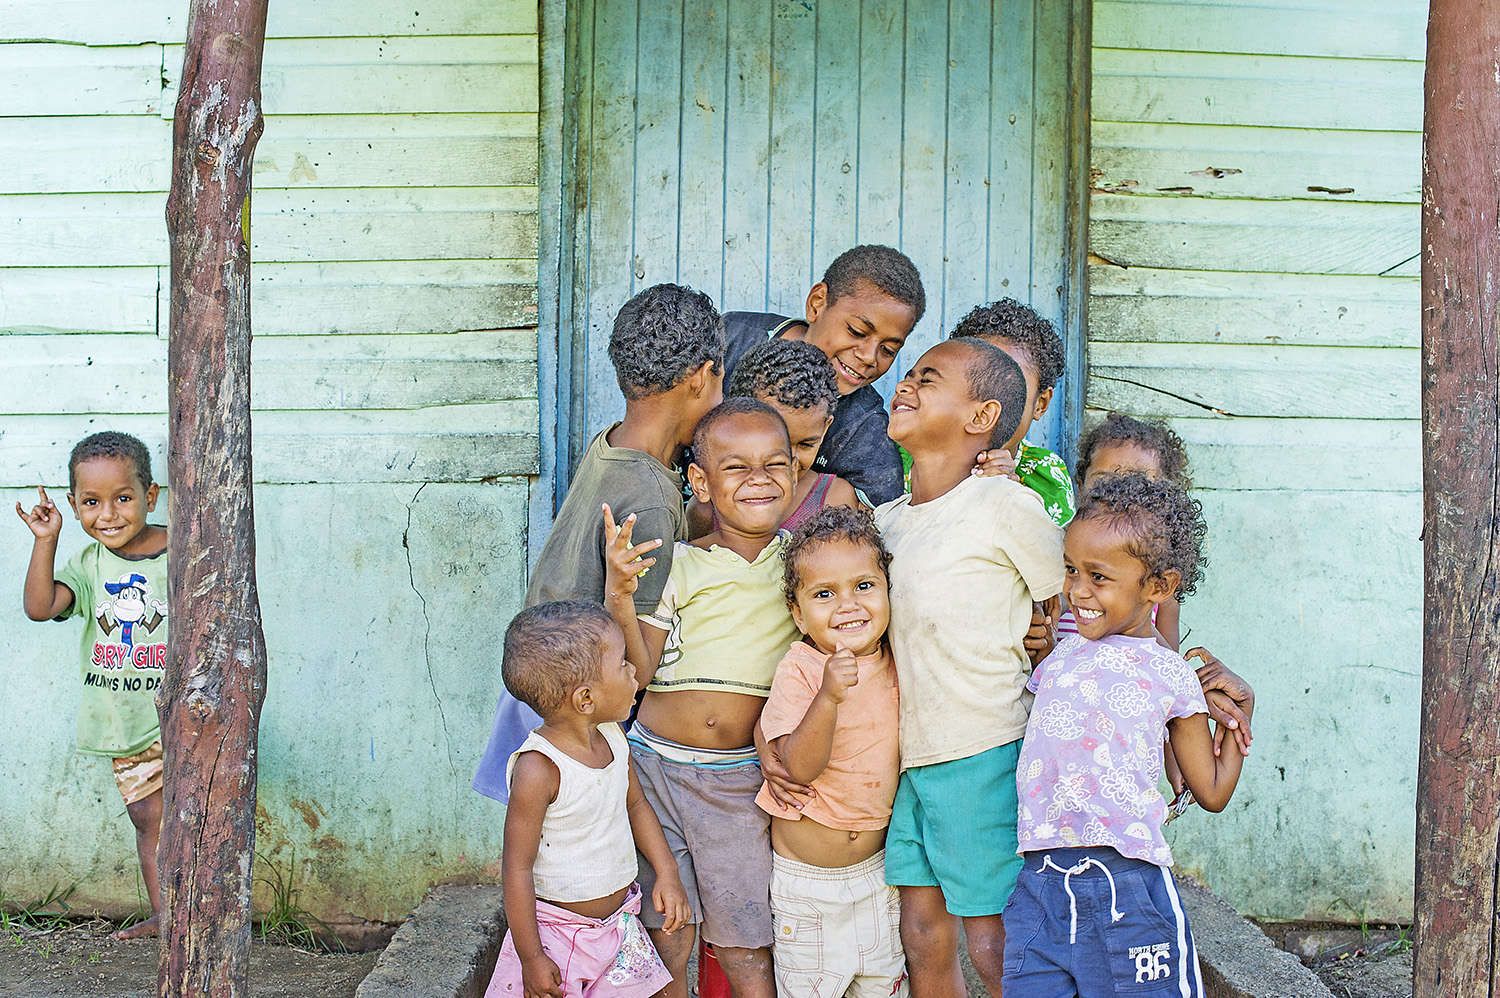 Travel Images - Kids in Fiji